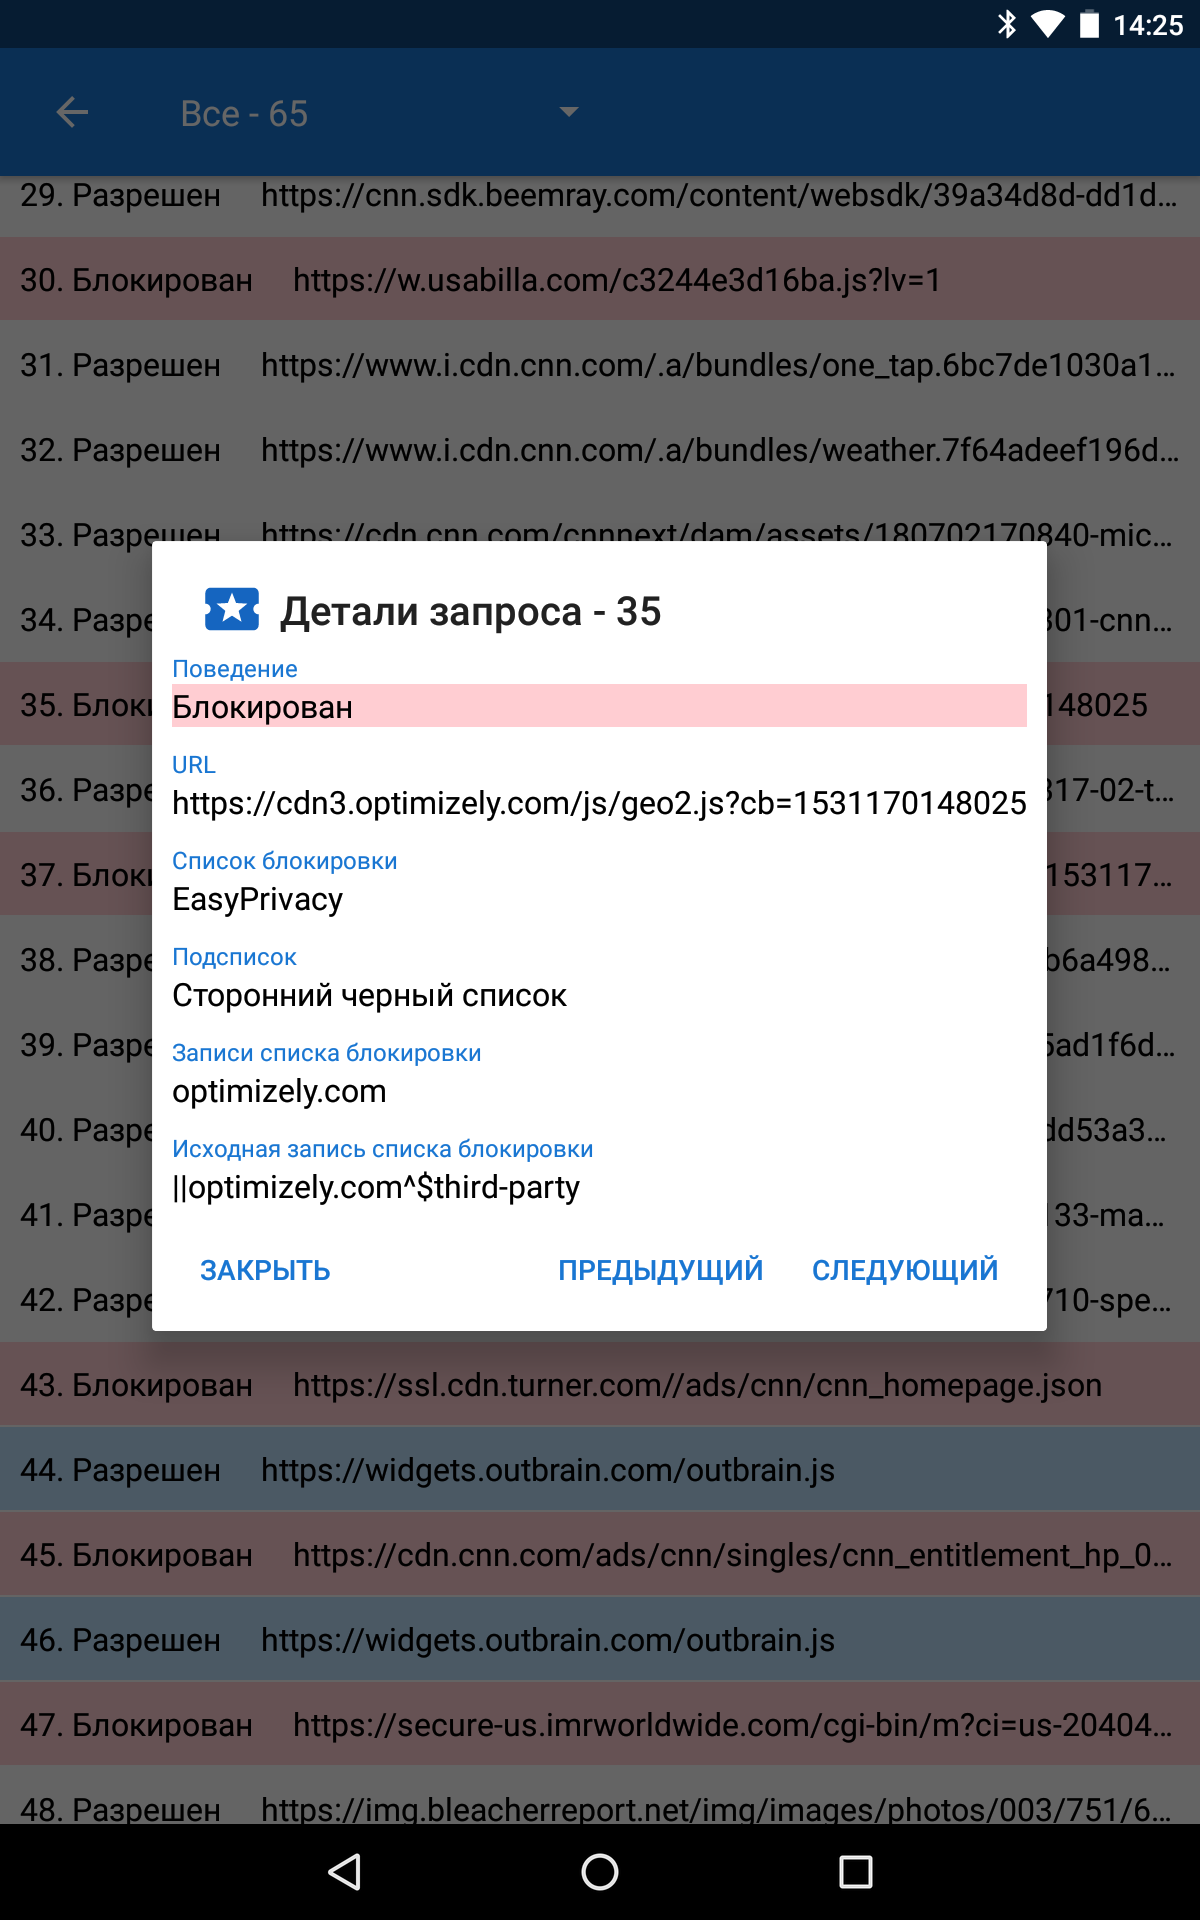 fastlane/metadata/android/ru-RU/images/sevenInchScreenshots/03-RequestDetails.png